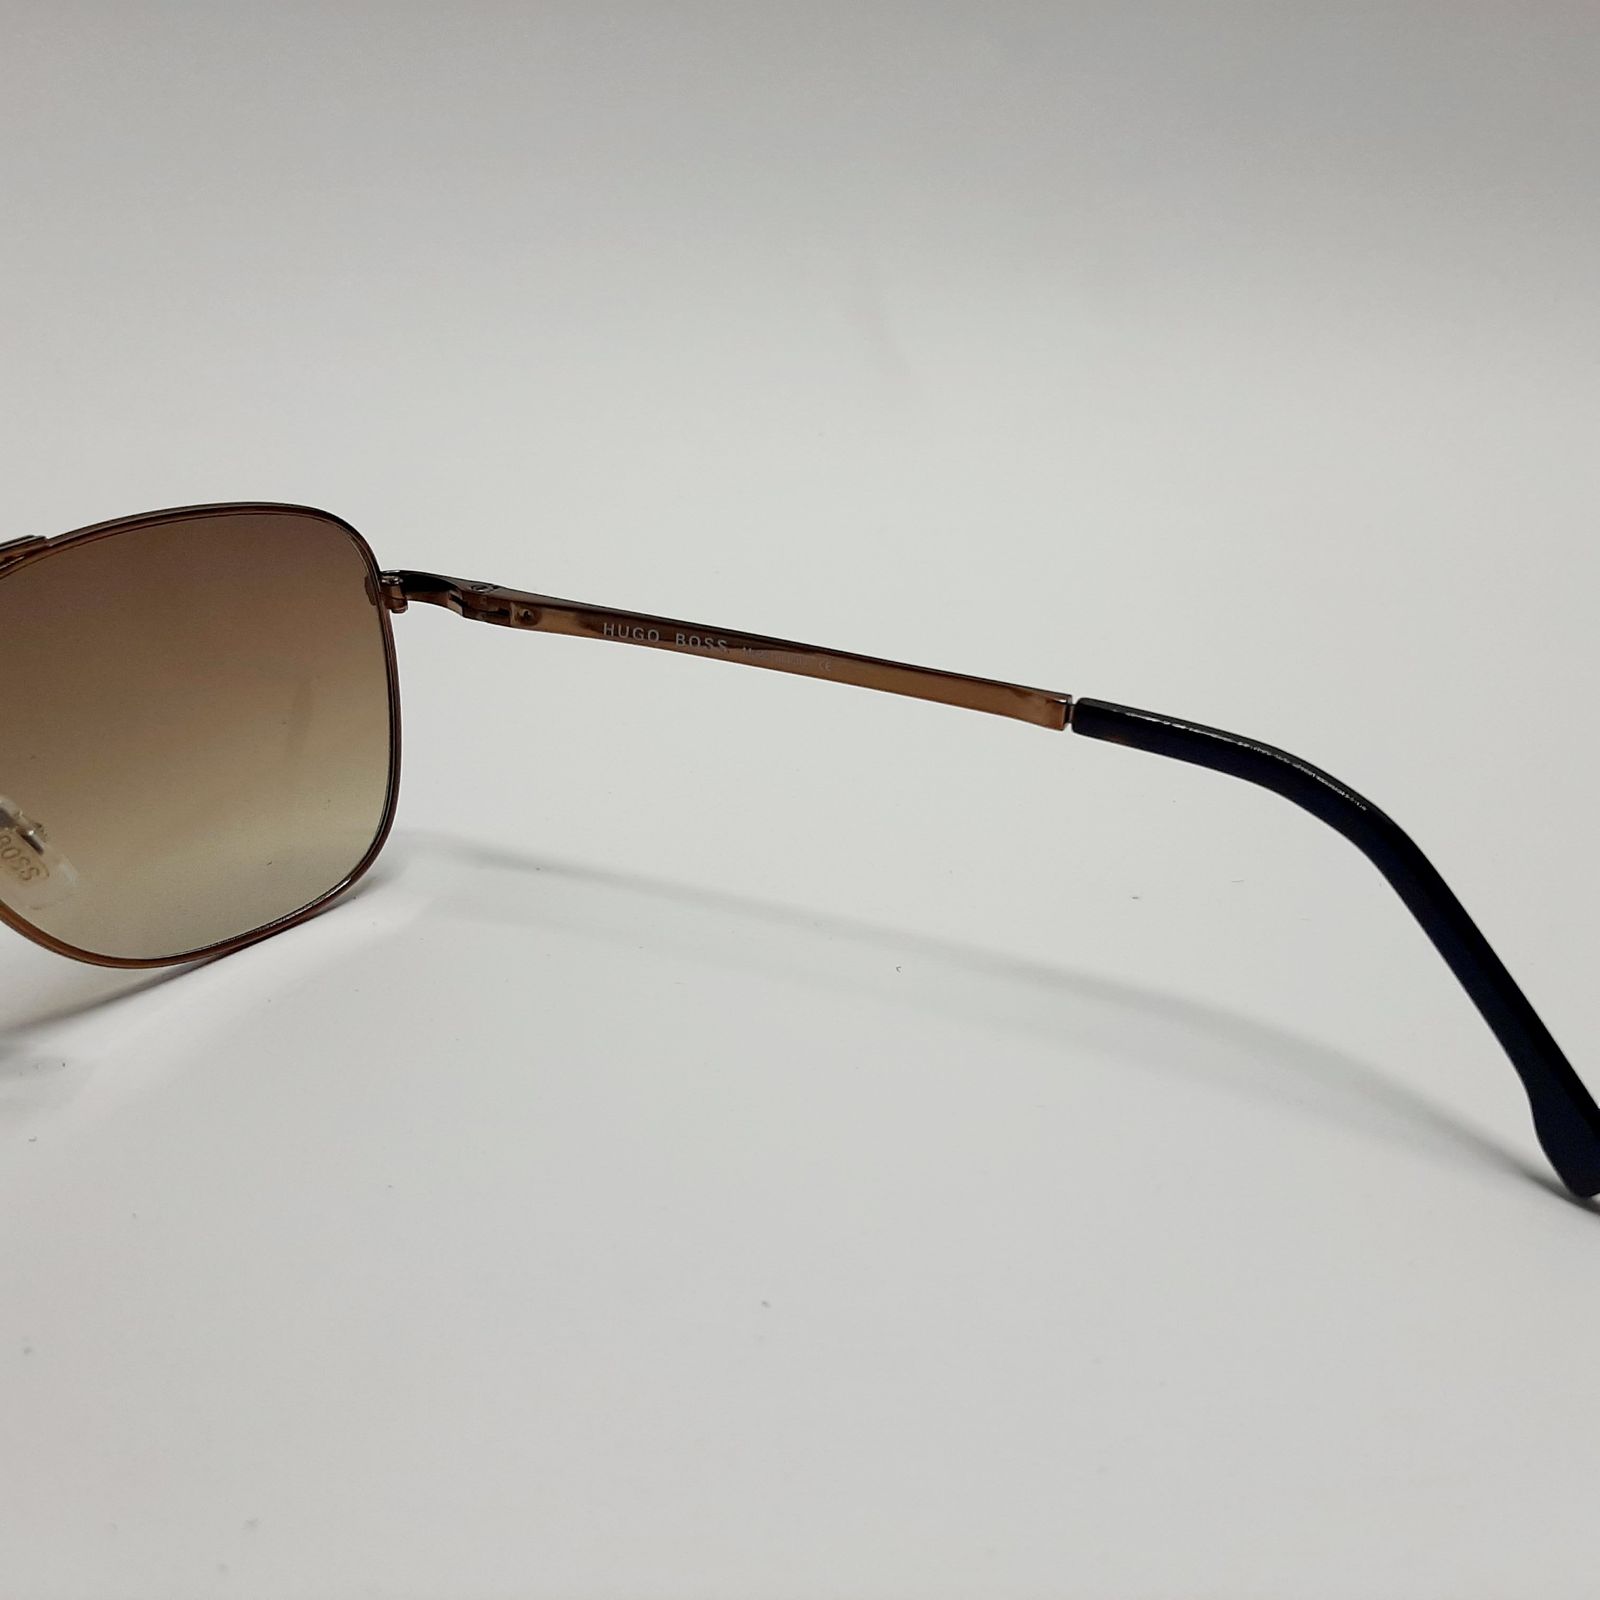 عینک آفتابی هوگو باس مدل HB1069c5 -  - 7